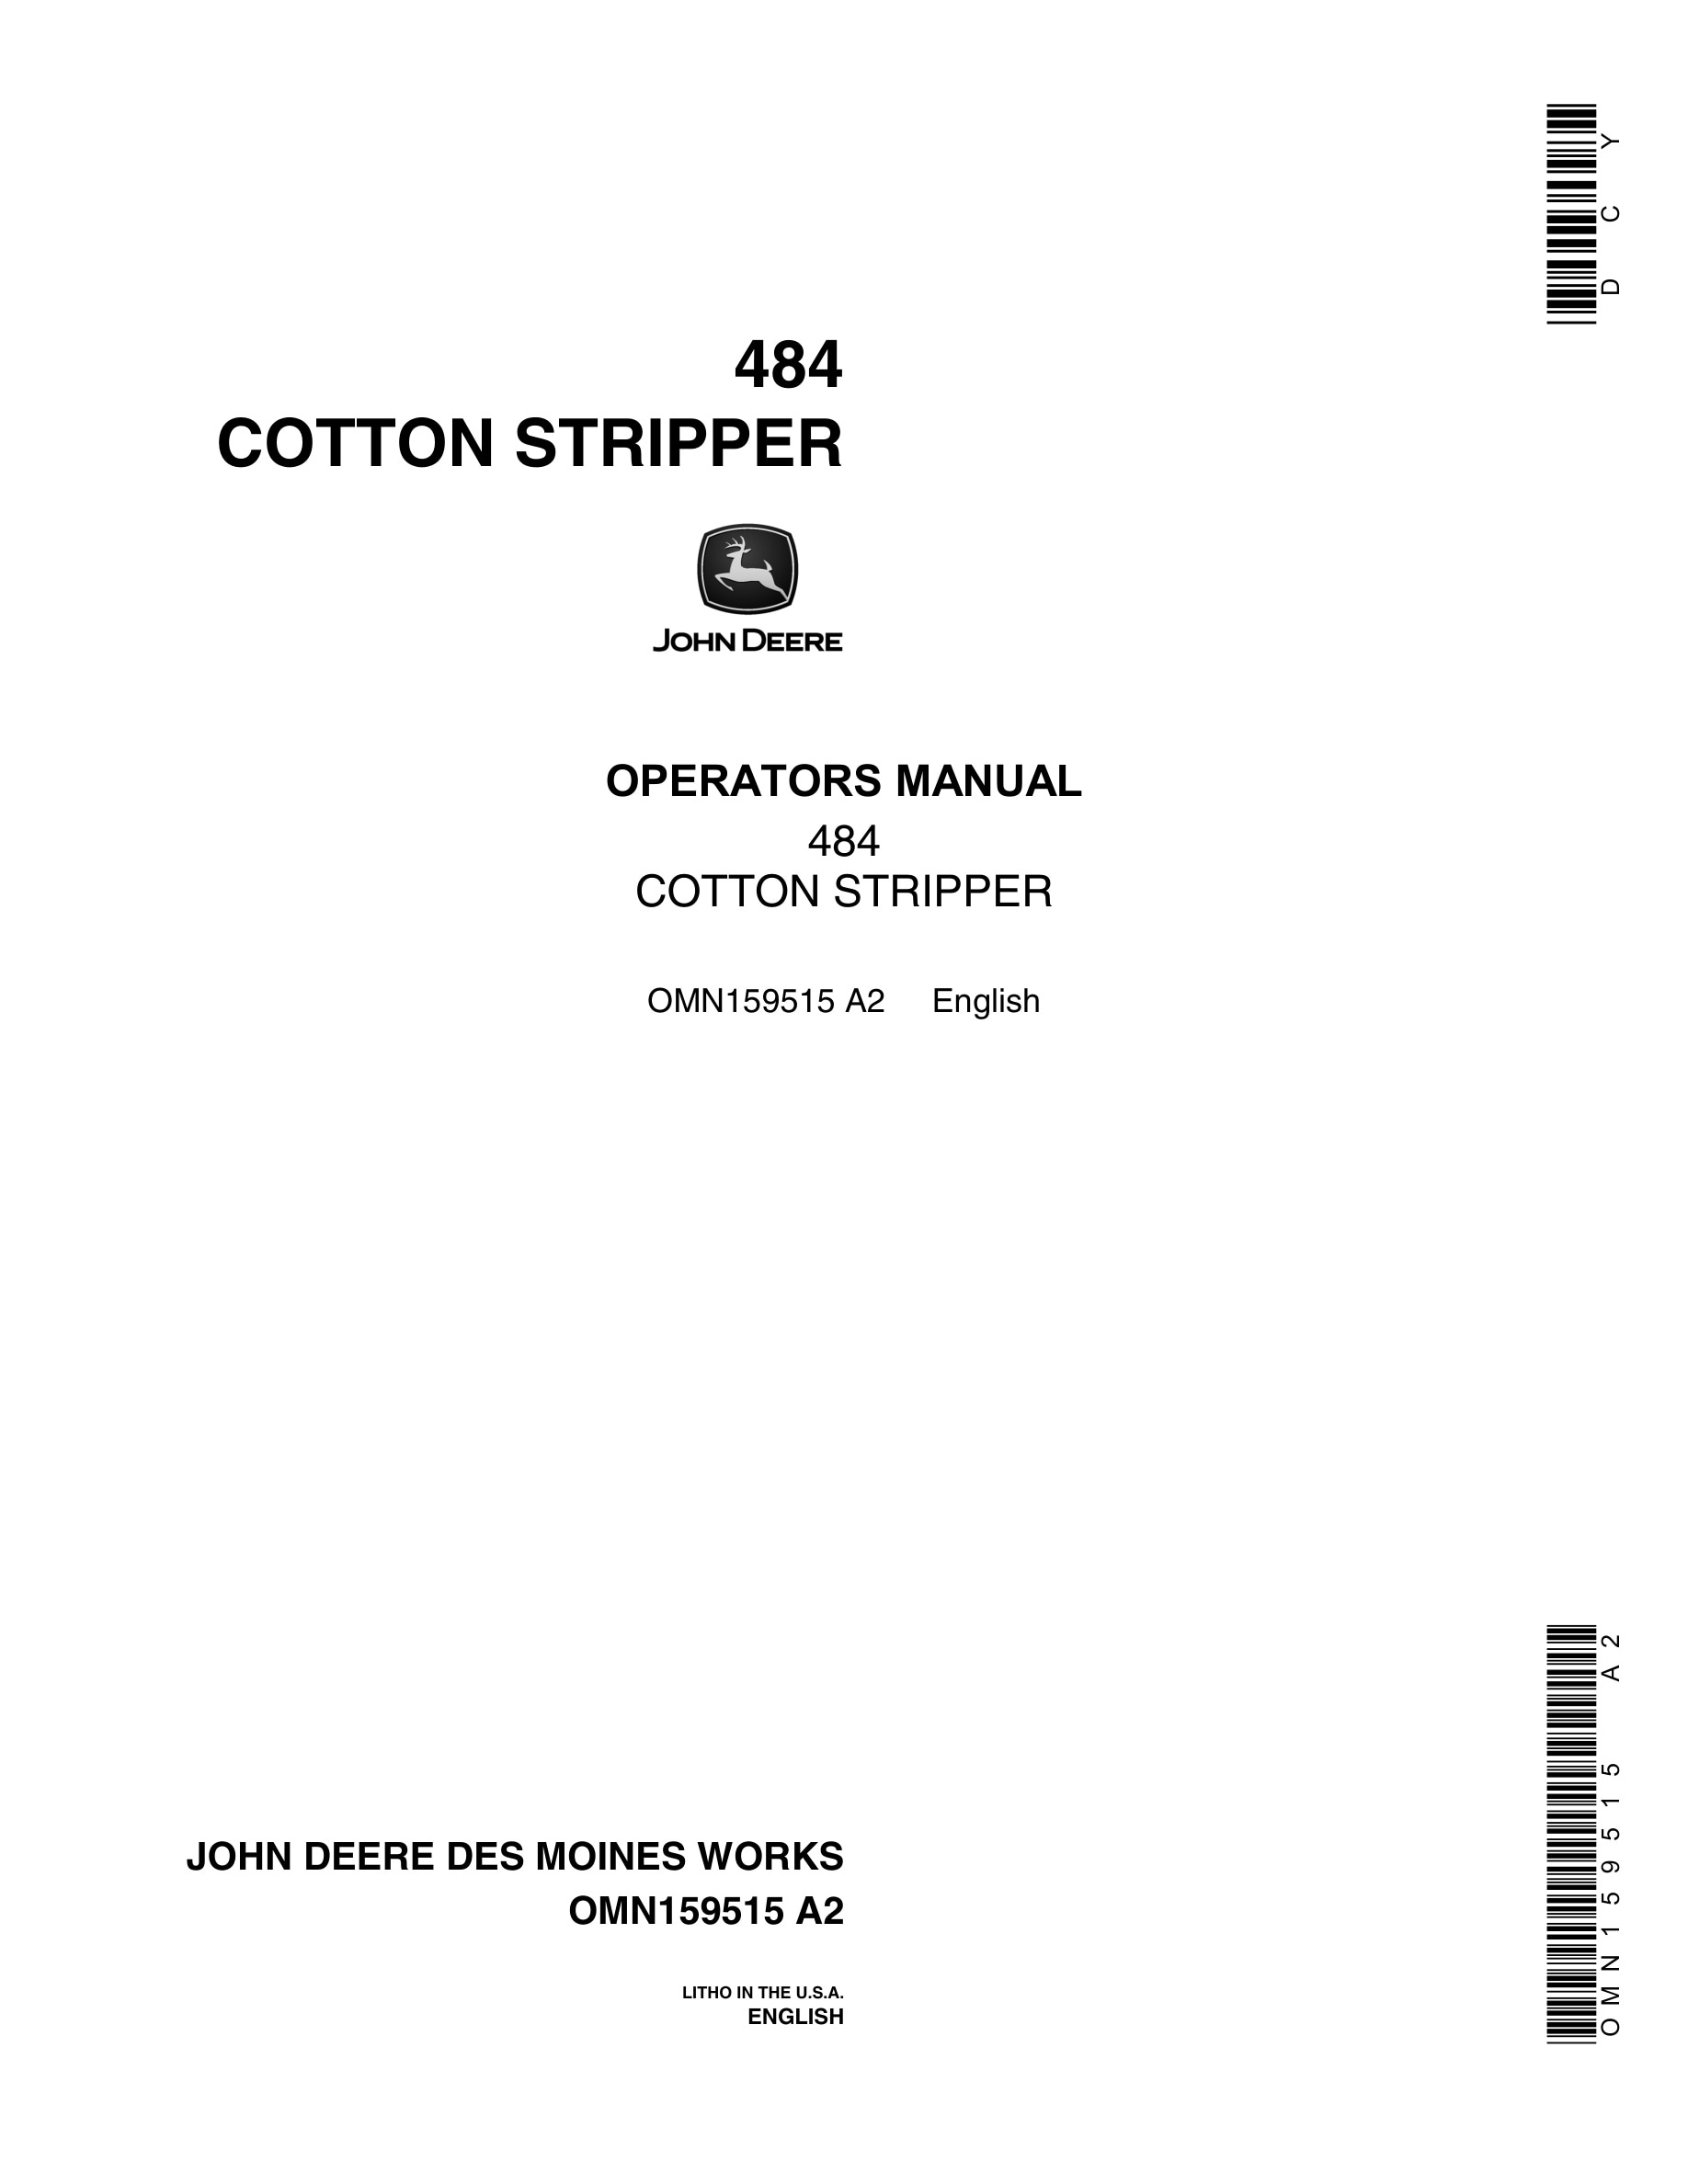 John Deere 484 Cotton Sripper Operator Manual OMN159515-1